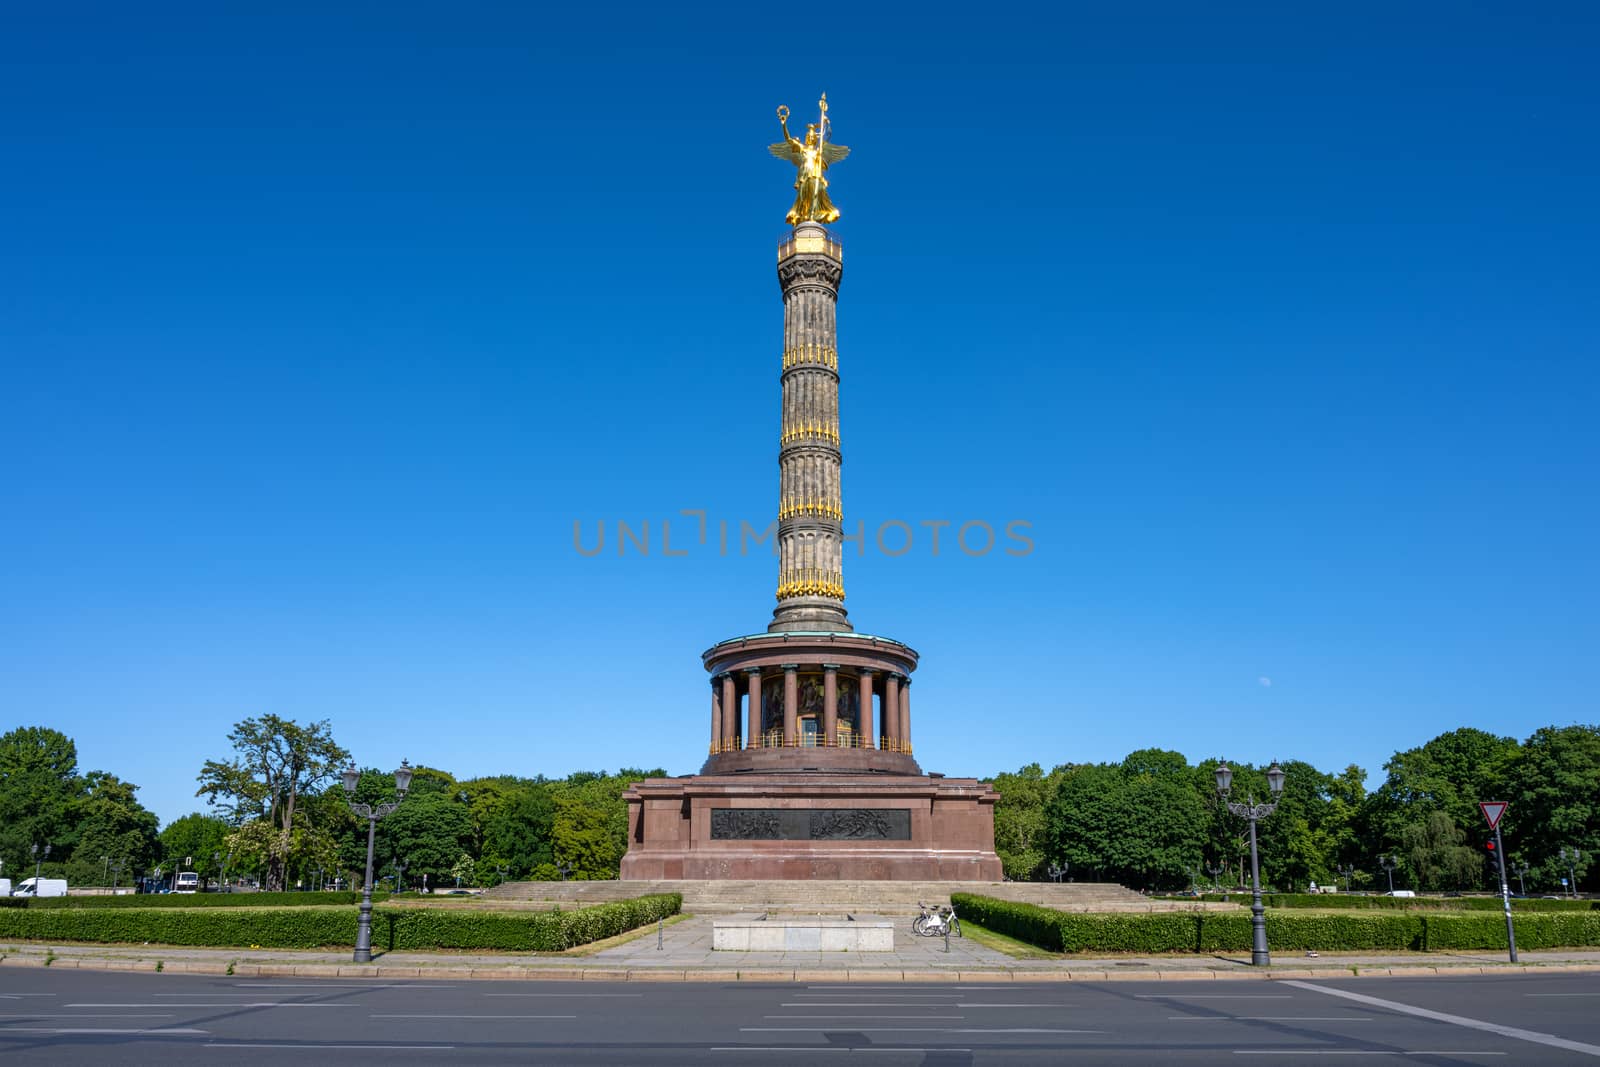 The famous Victory Column in the Tiergarten in Berlin, Germany